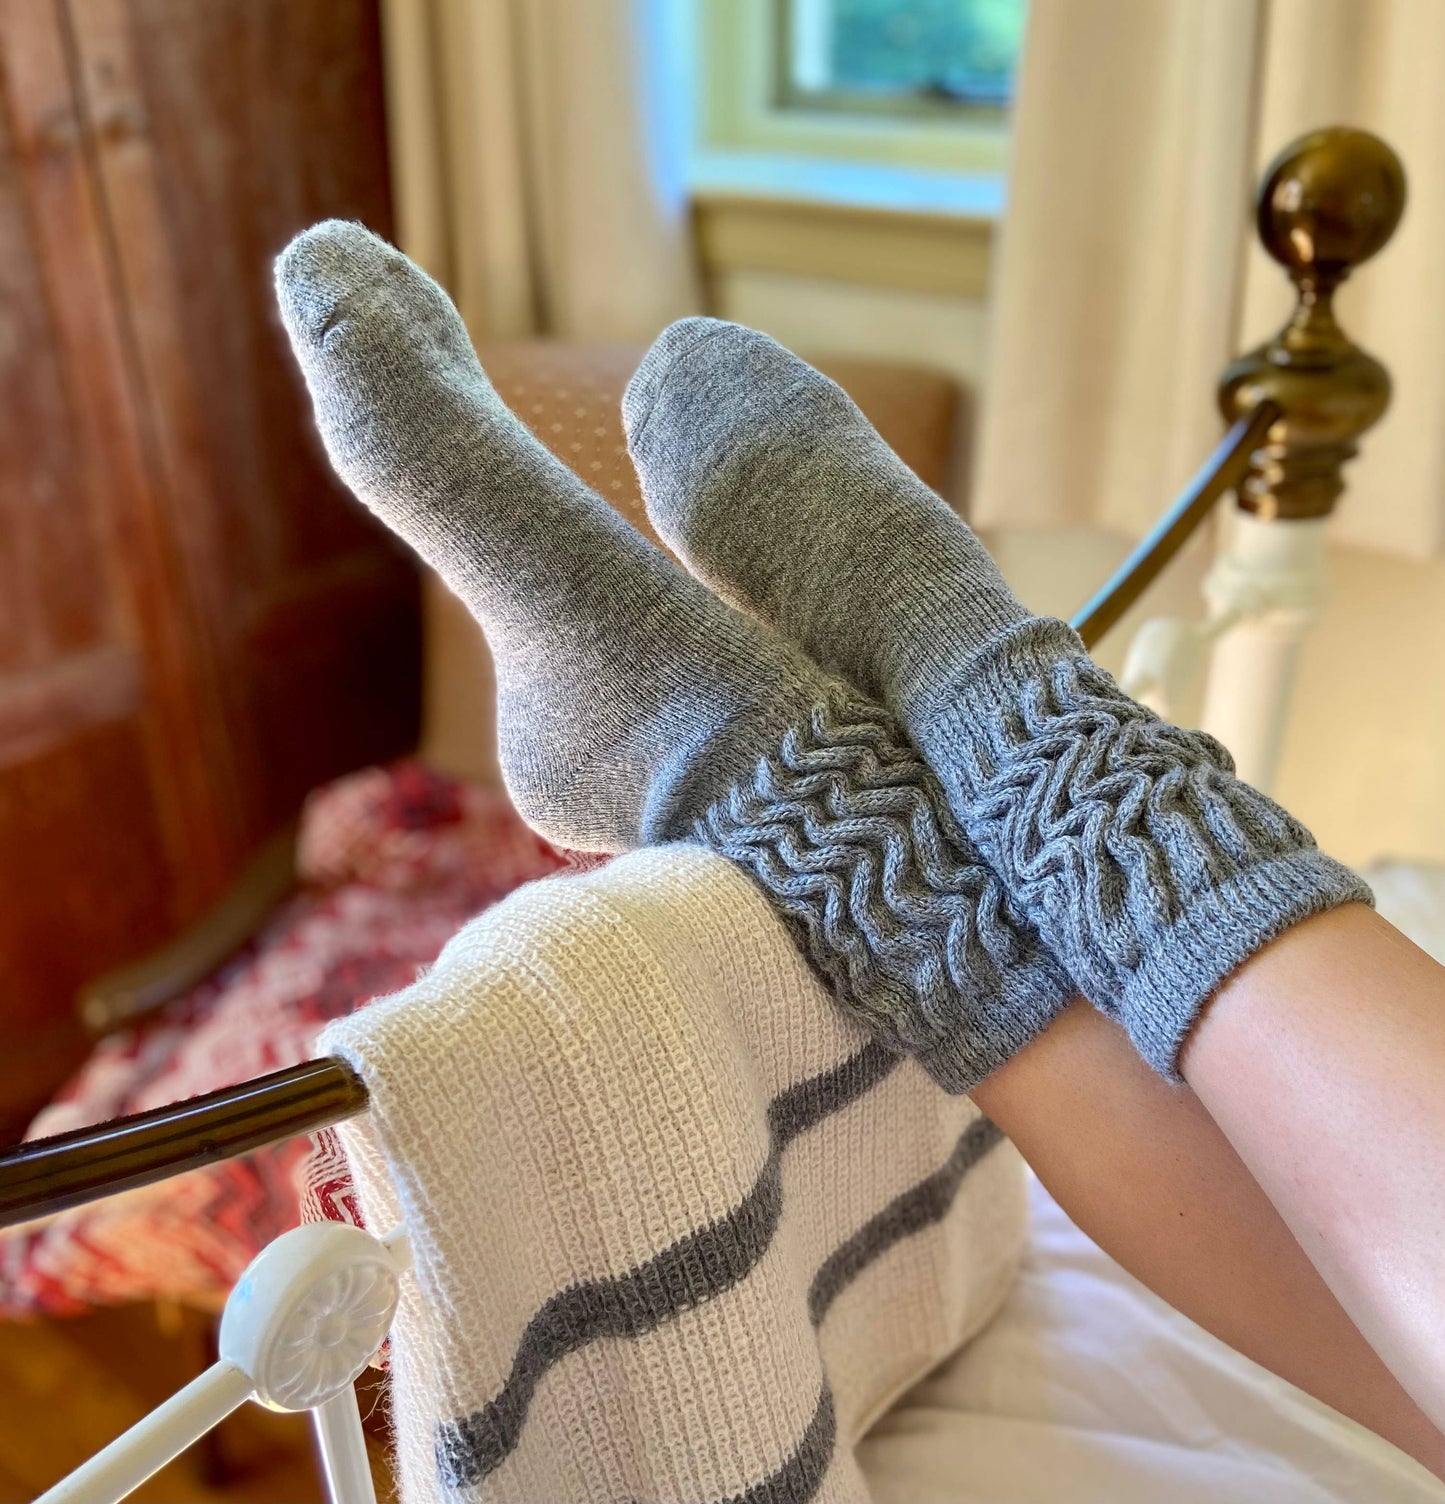 Cozy Alpaca Socks